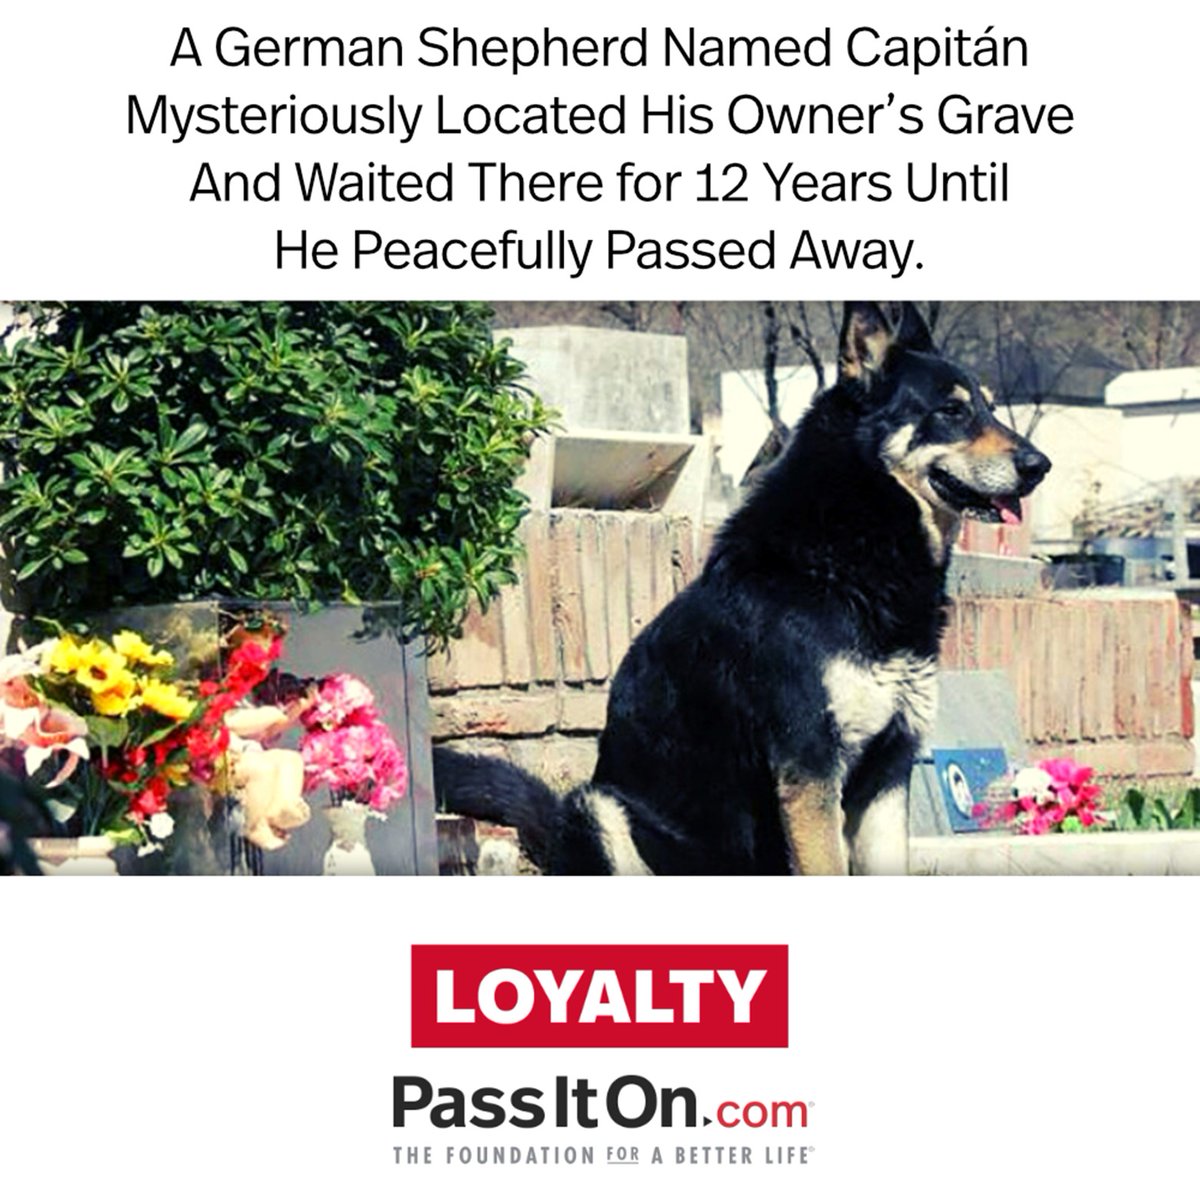 #loyalty #passiton
.
.
.
#inspiration #motivation #inspirationalquotes #values #valuesmatter #dogs  #instadogs #germanshepard